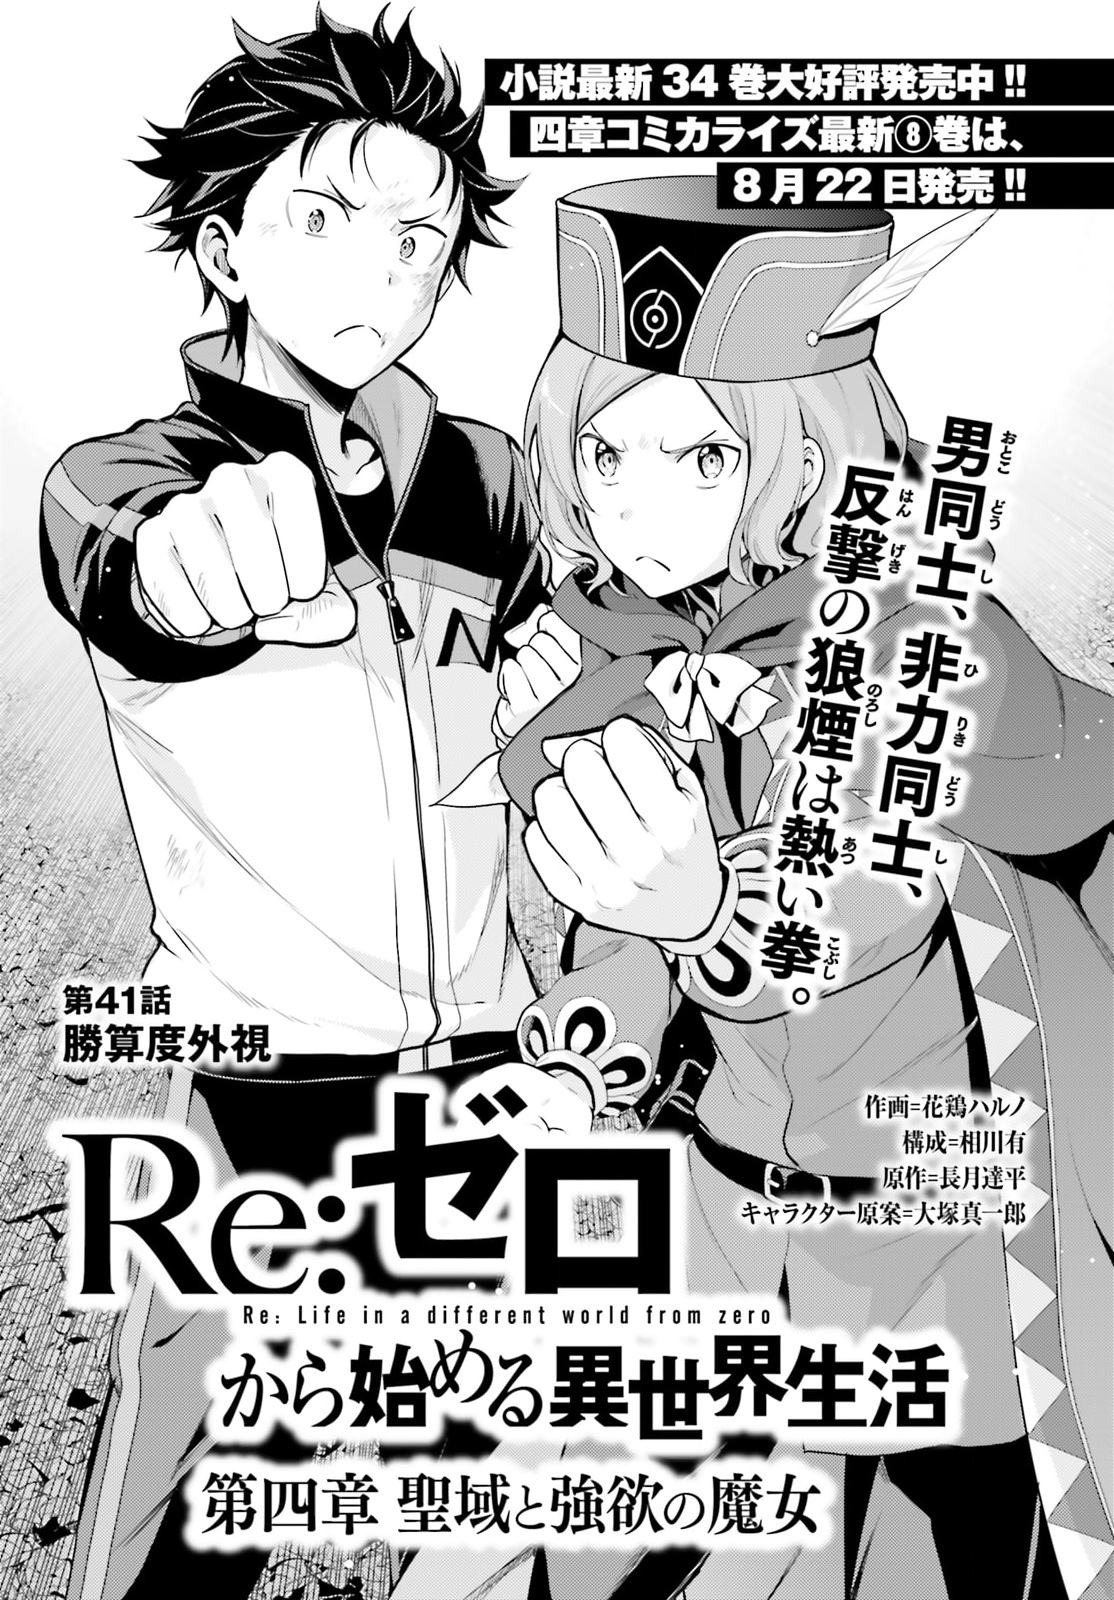 Shinmeitan Manga Volume 3, Re:Zero Wiki